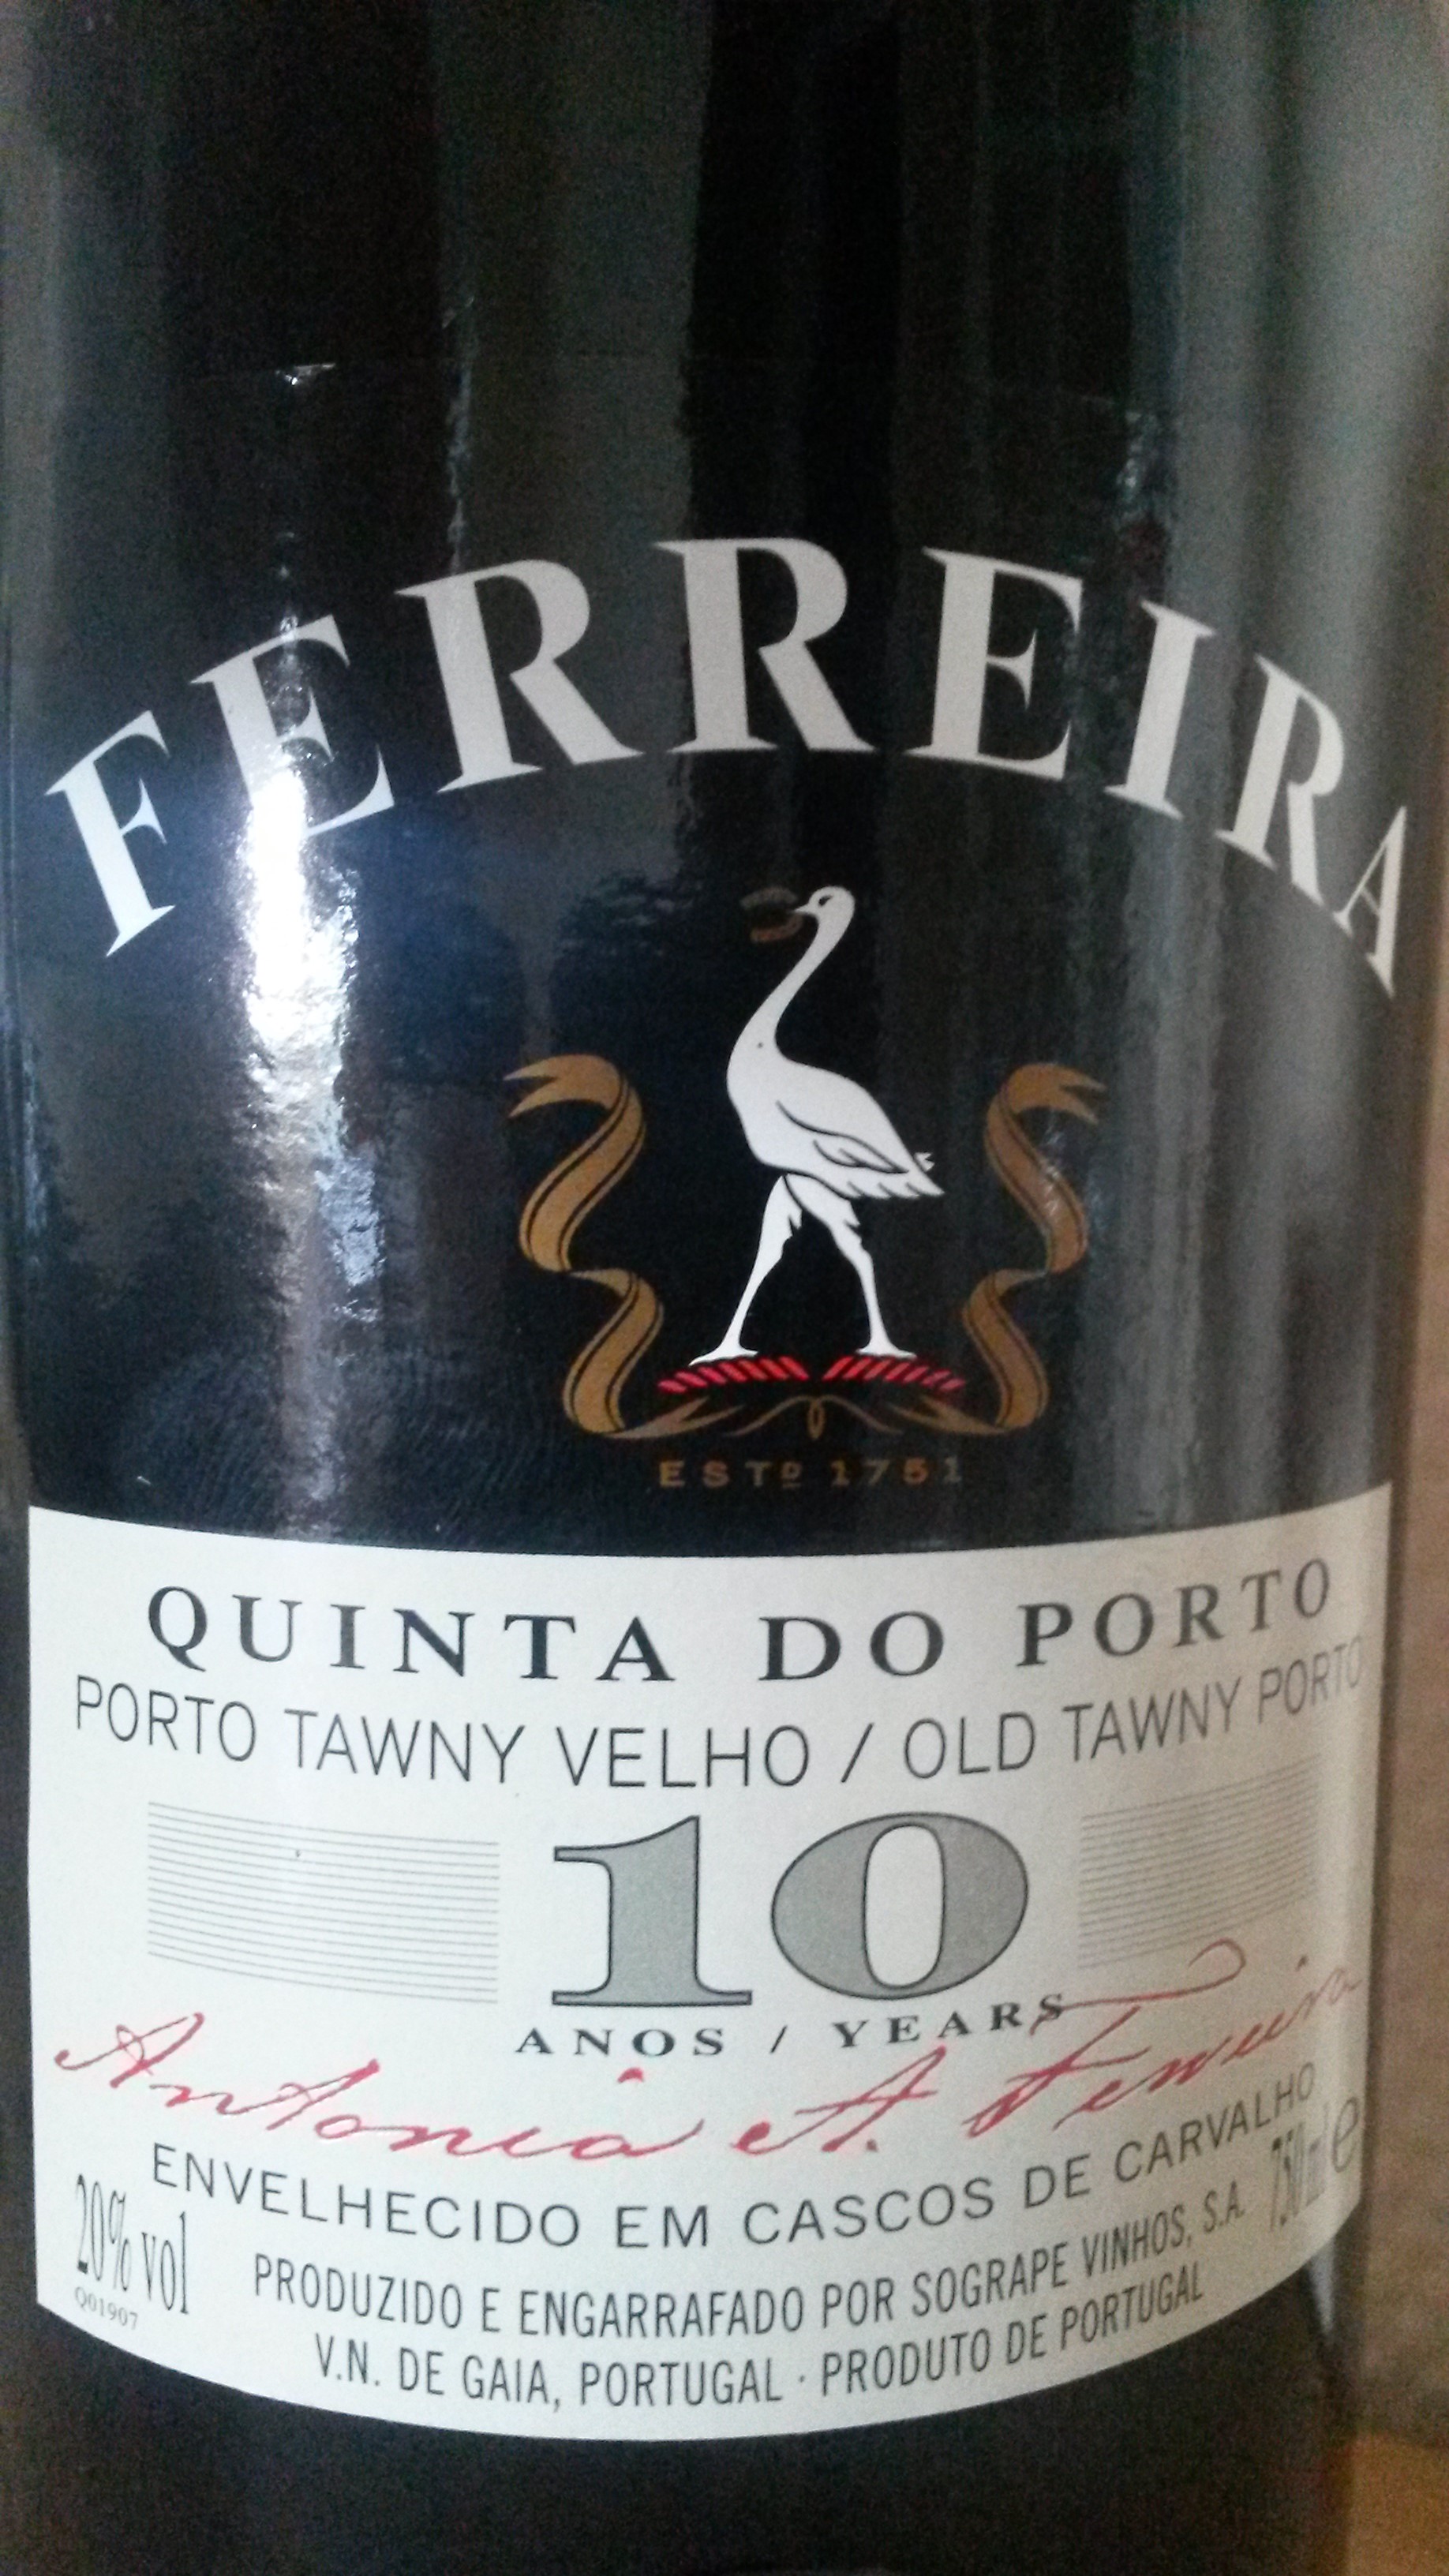 Ferreira 10 års